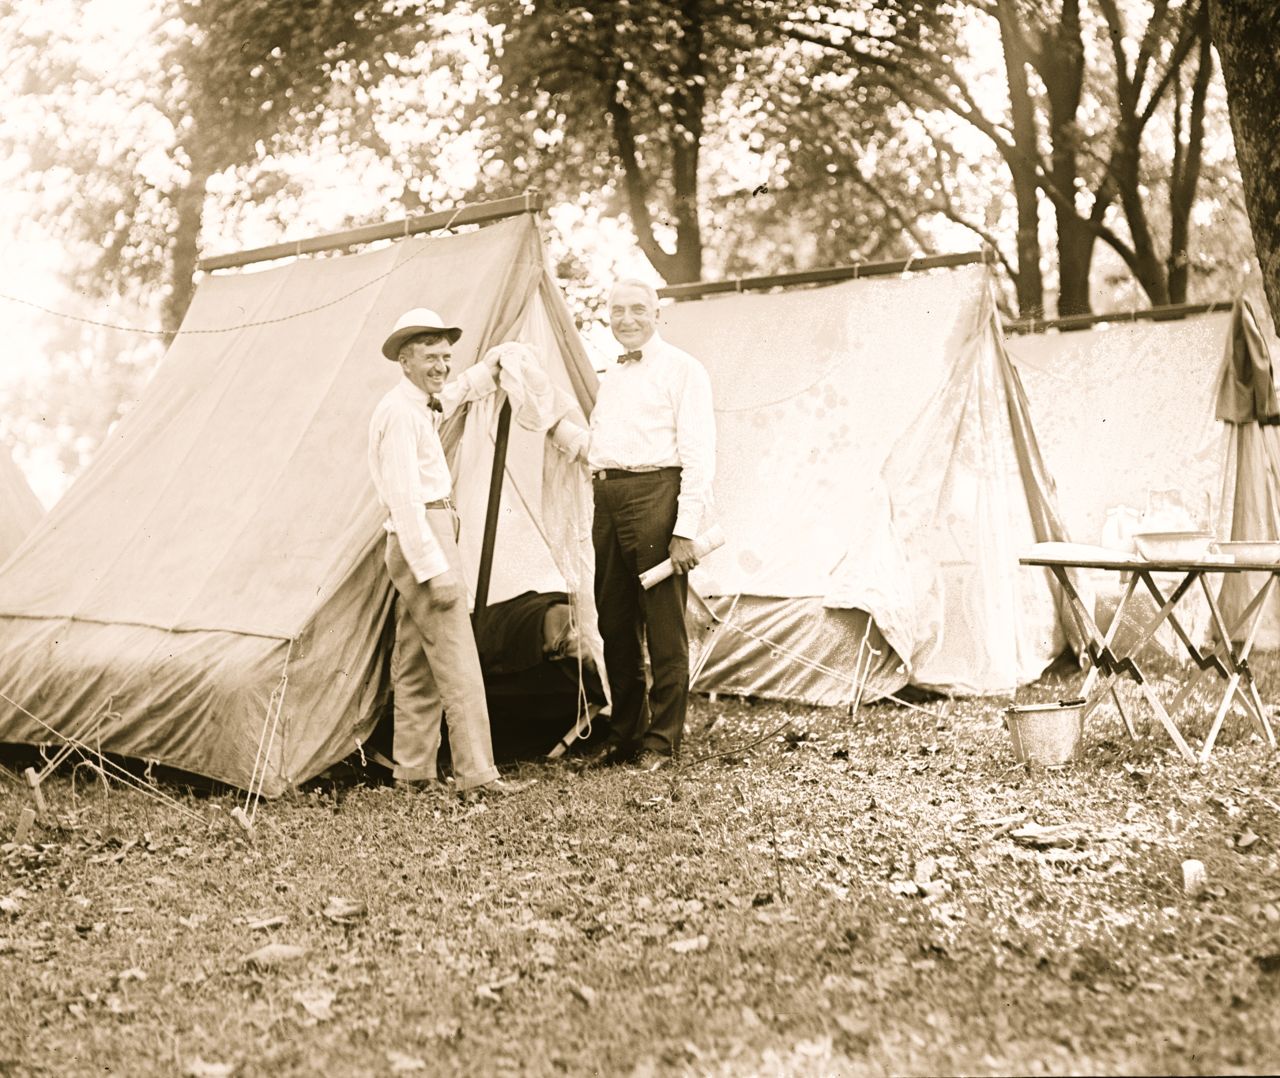 President Warren Harding, right, goes camping with Firestone Tire founder Harvey Firestone in 1921.